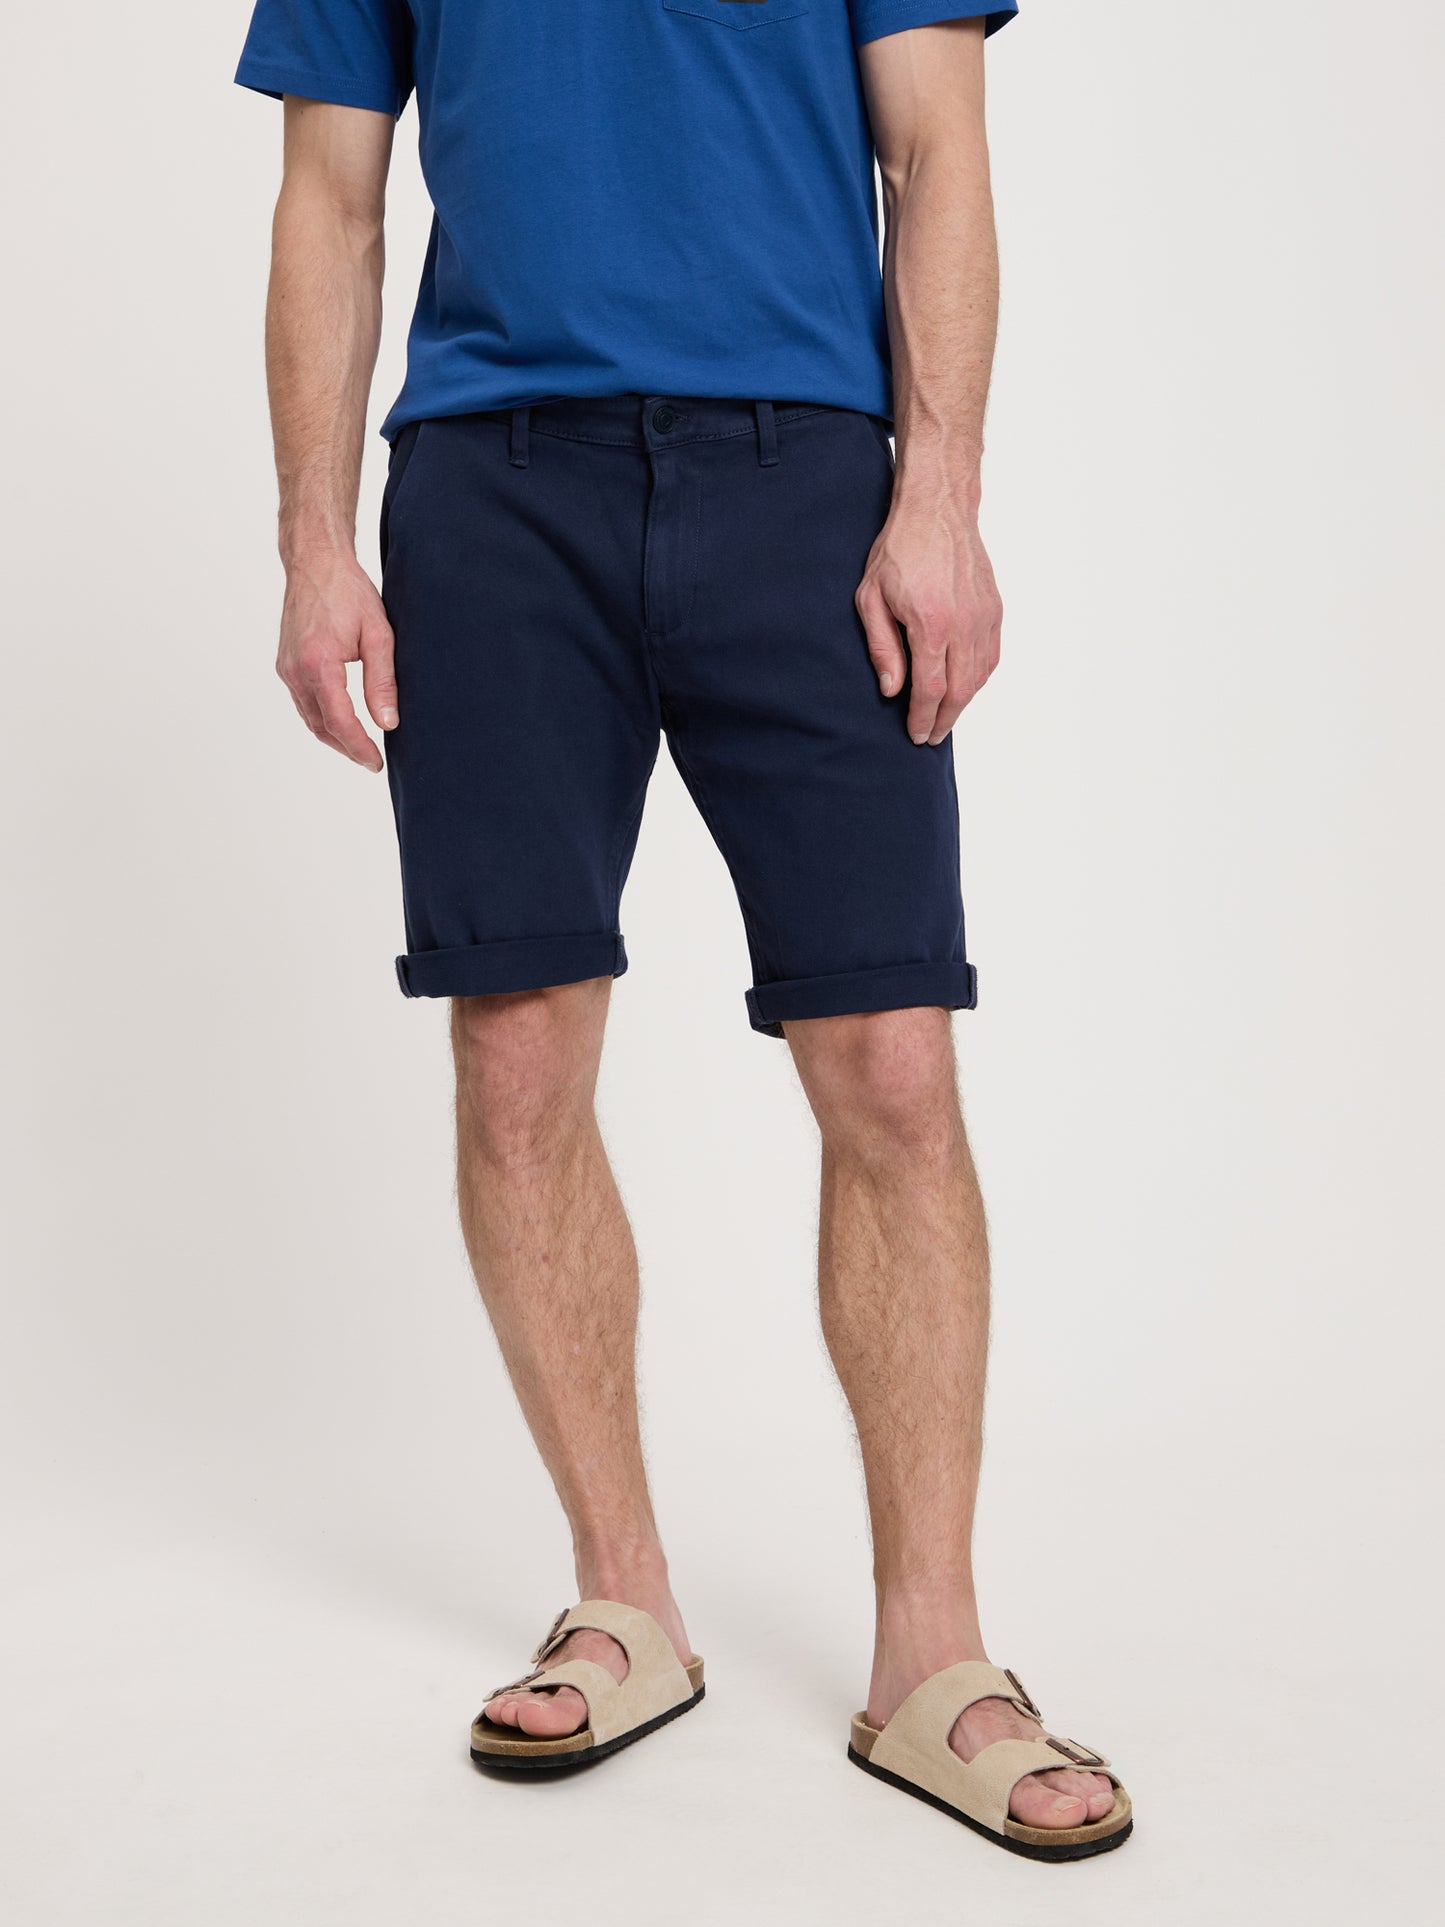 Leom Herren Jeans-Shorts Regular Fit marineblau.